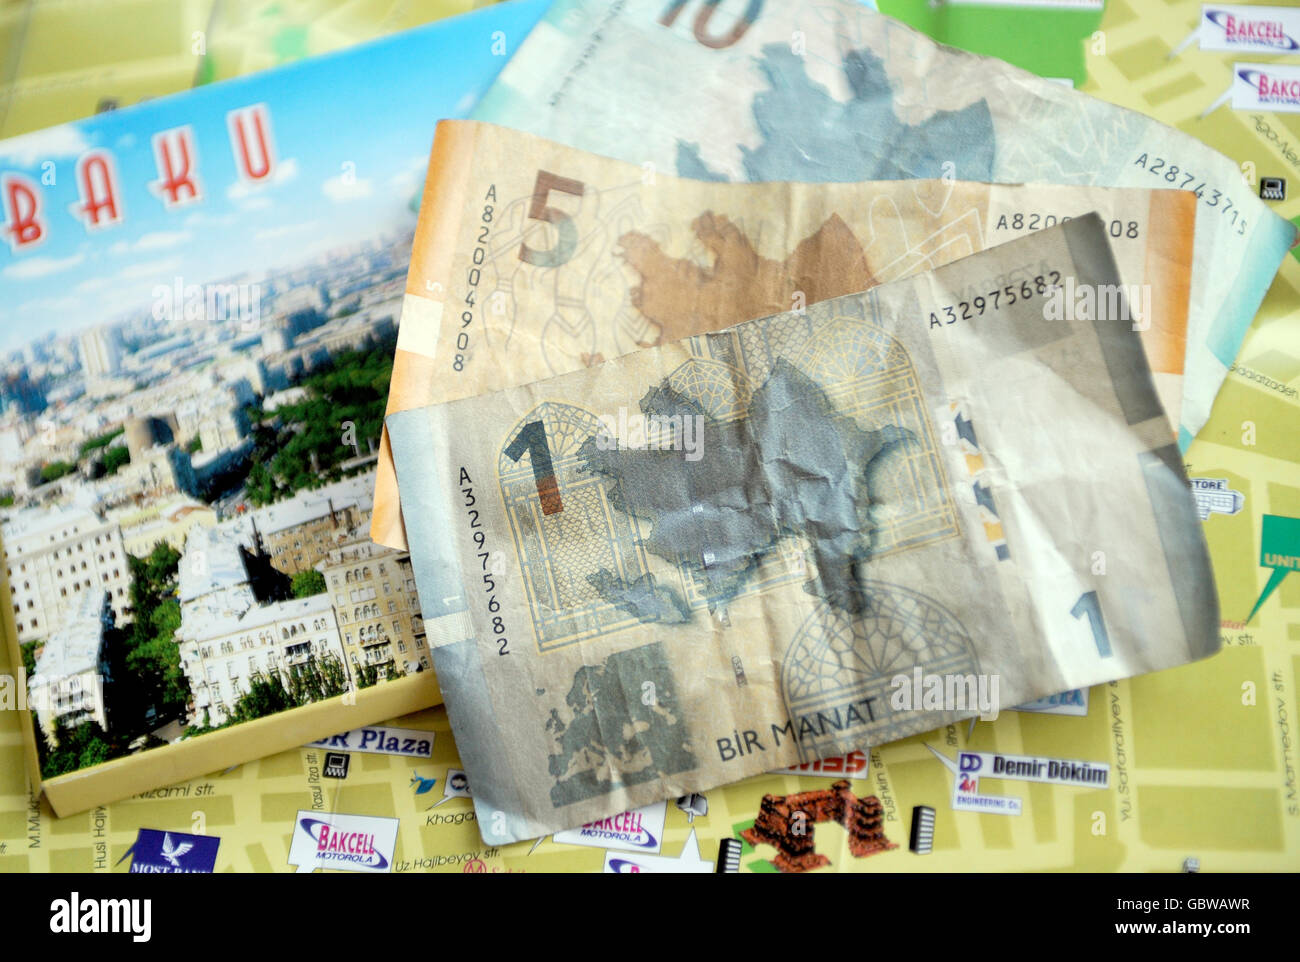 Travel Stock - Baku - Azerbaijan. General view of Azerbaijan currency, the Manat, on top of a map of Baku, Azerbaijan Stock Photo